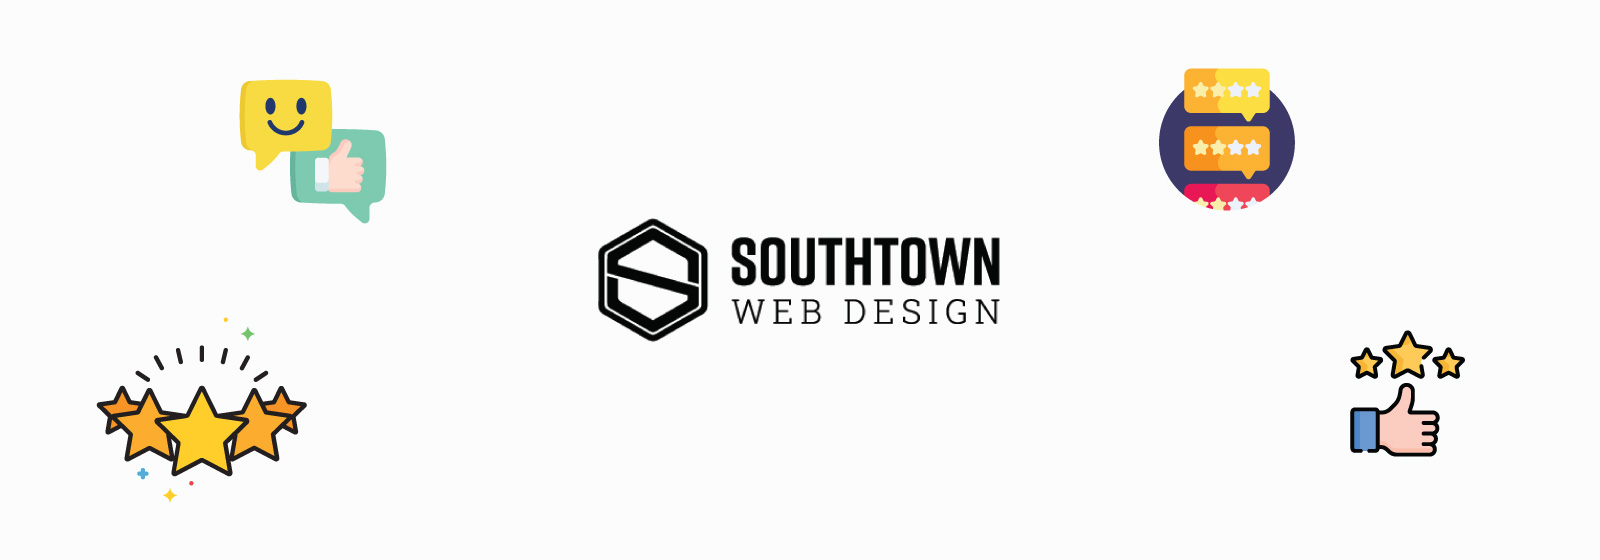 southtown web design reviews